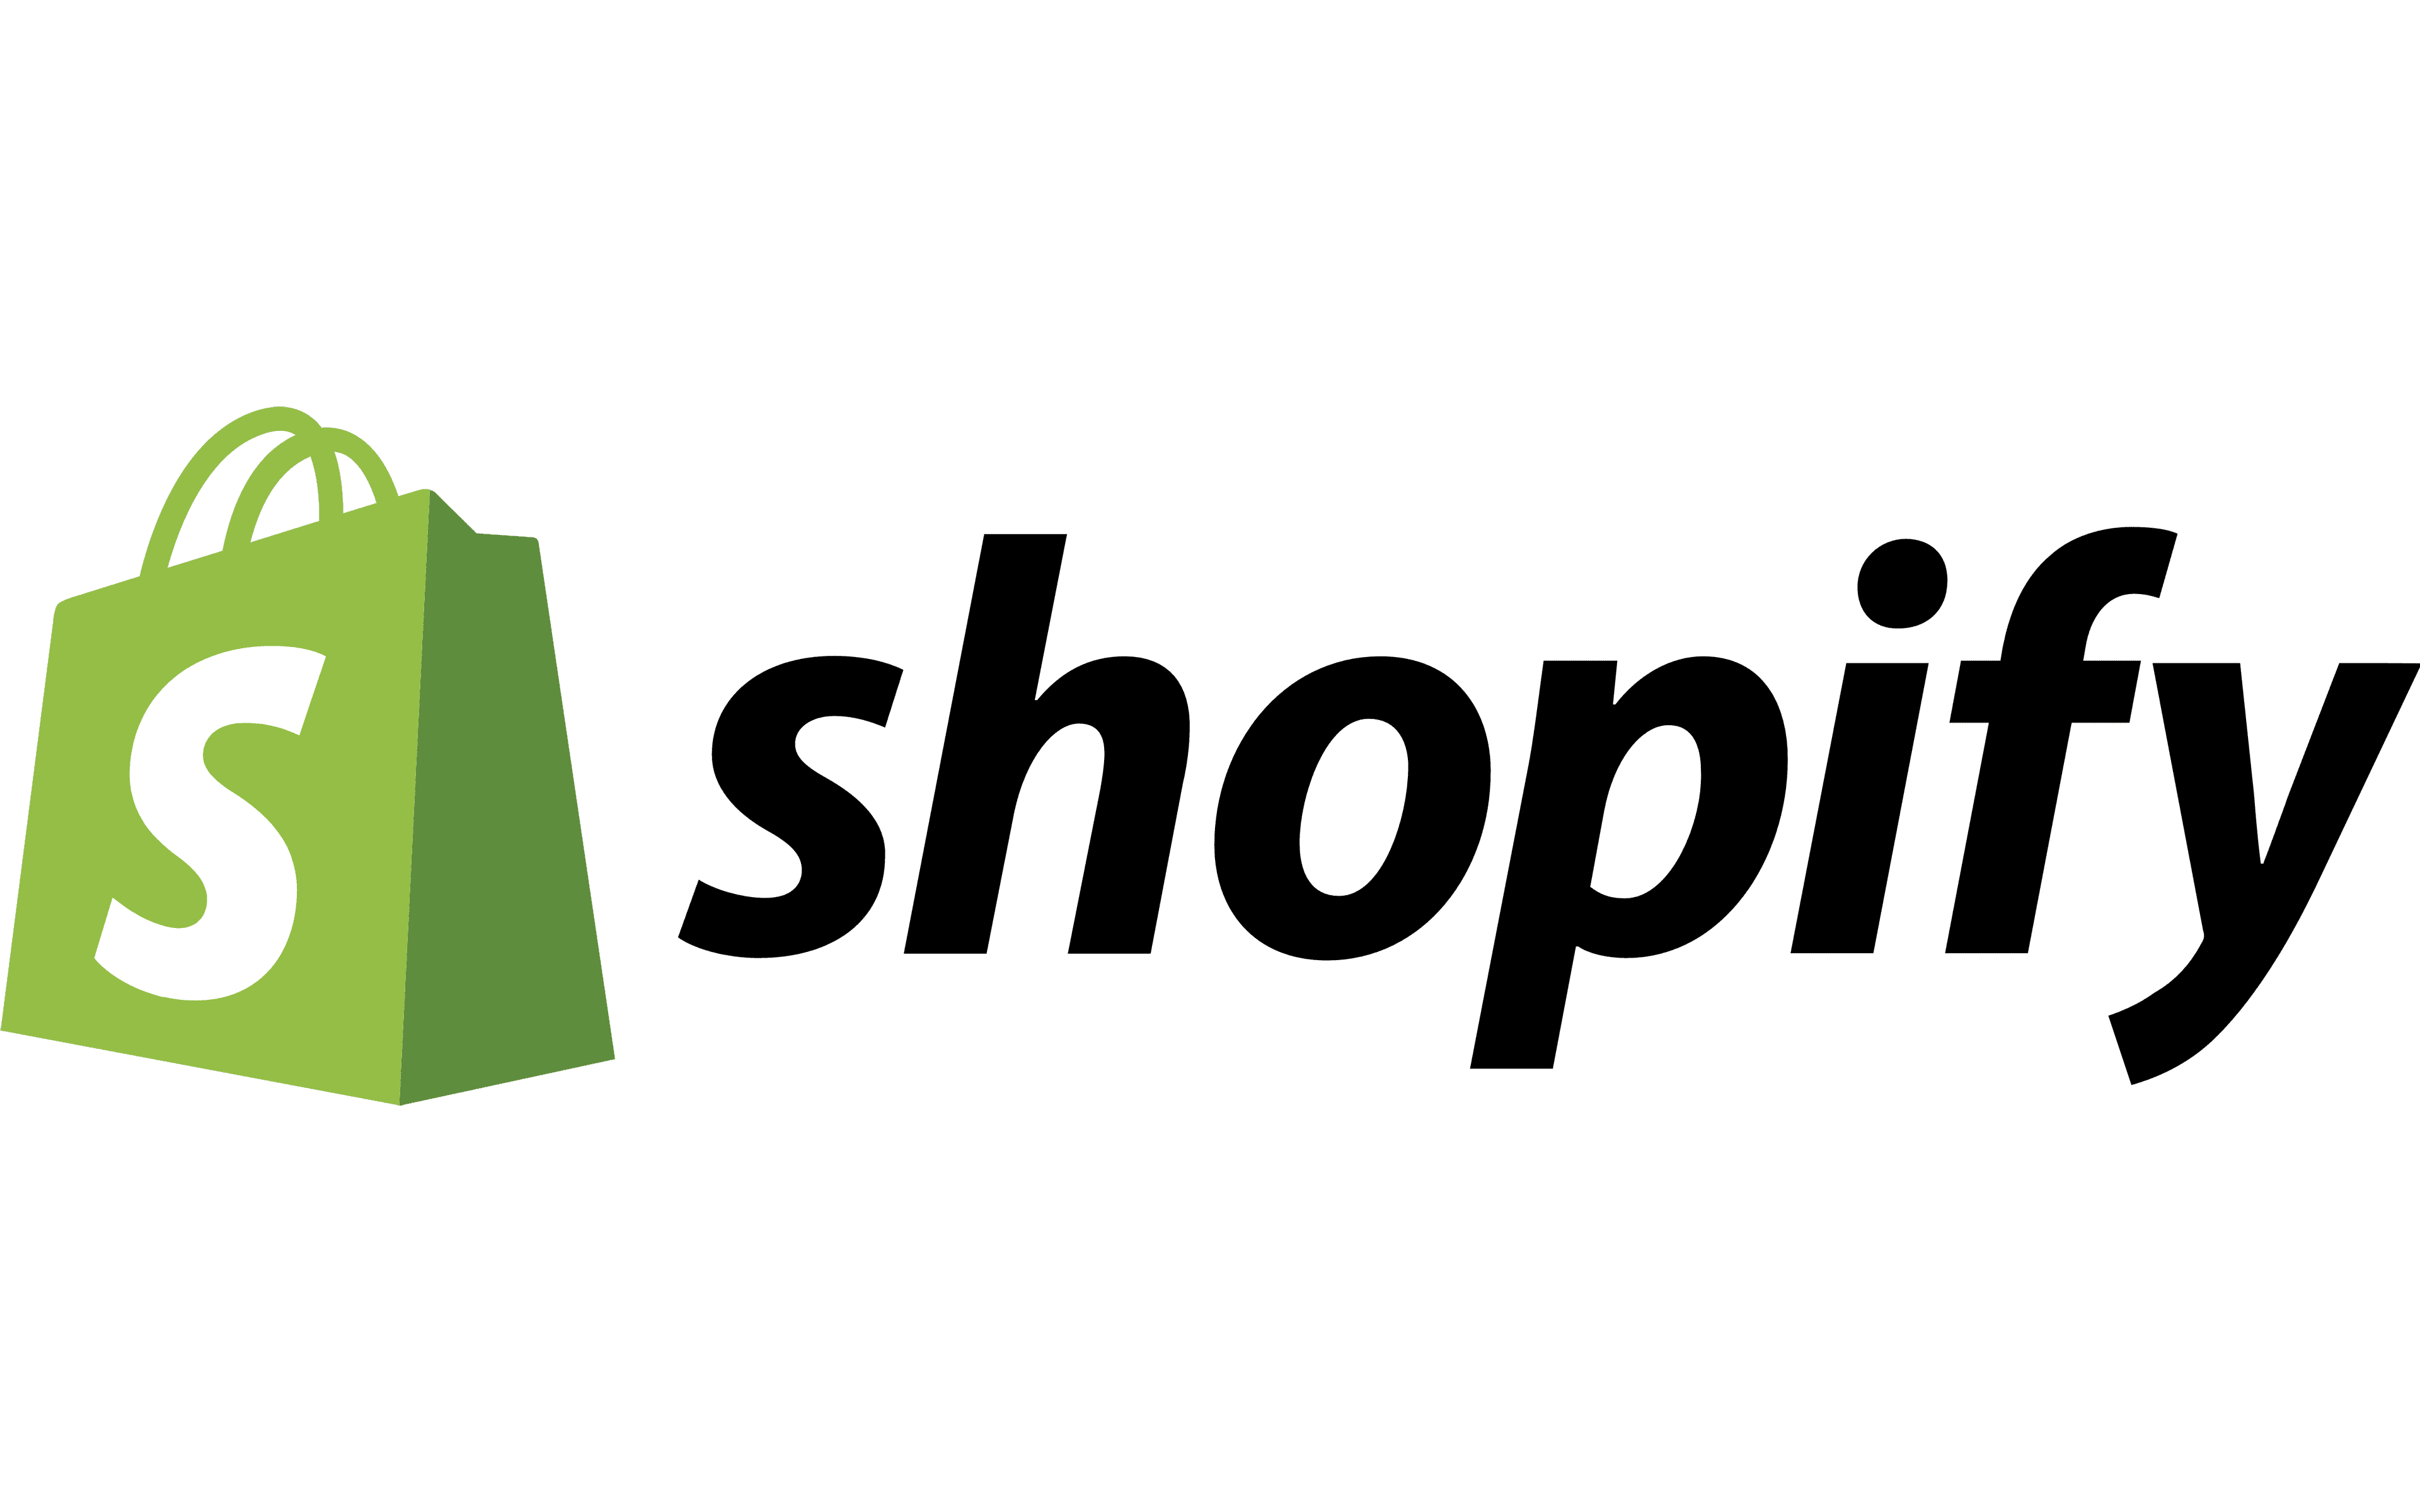 Shopify-Logo-1